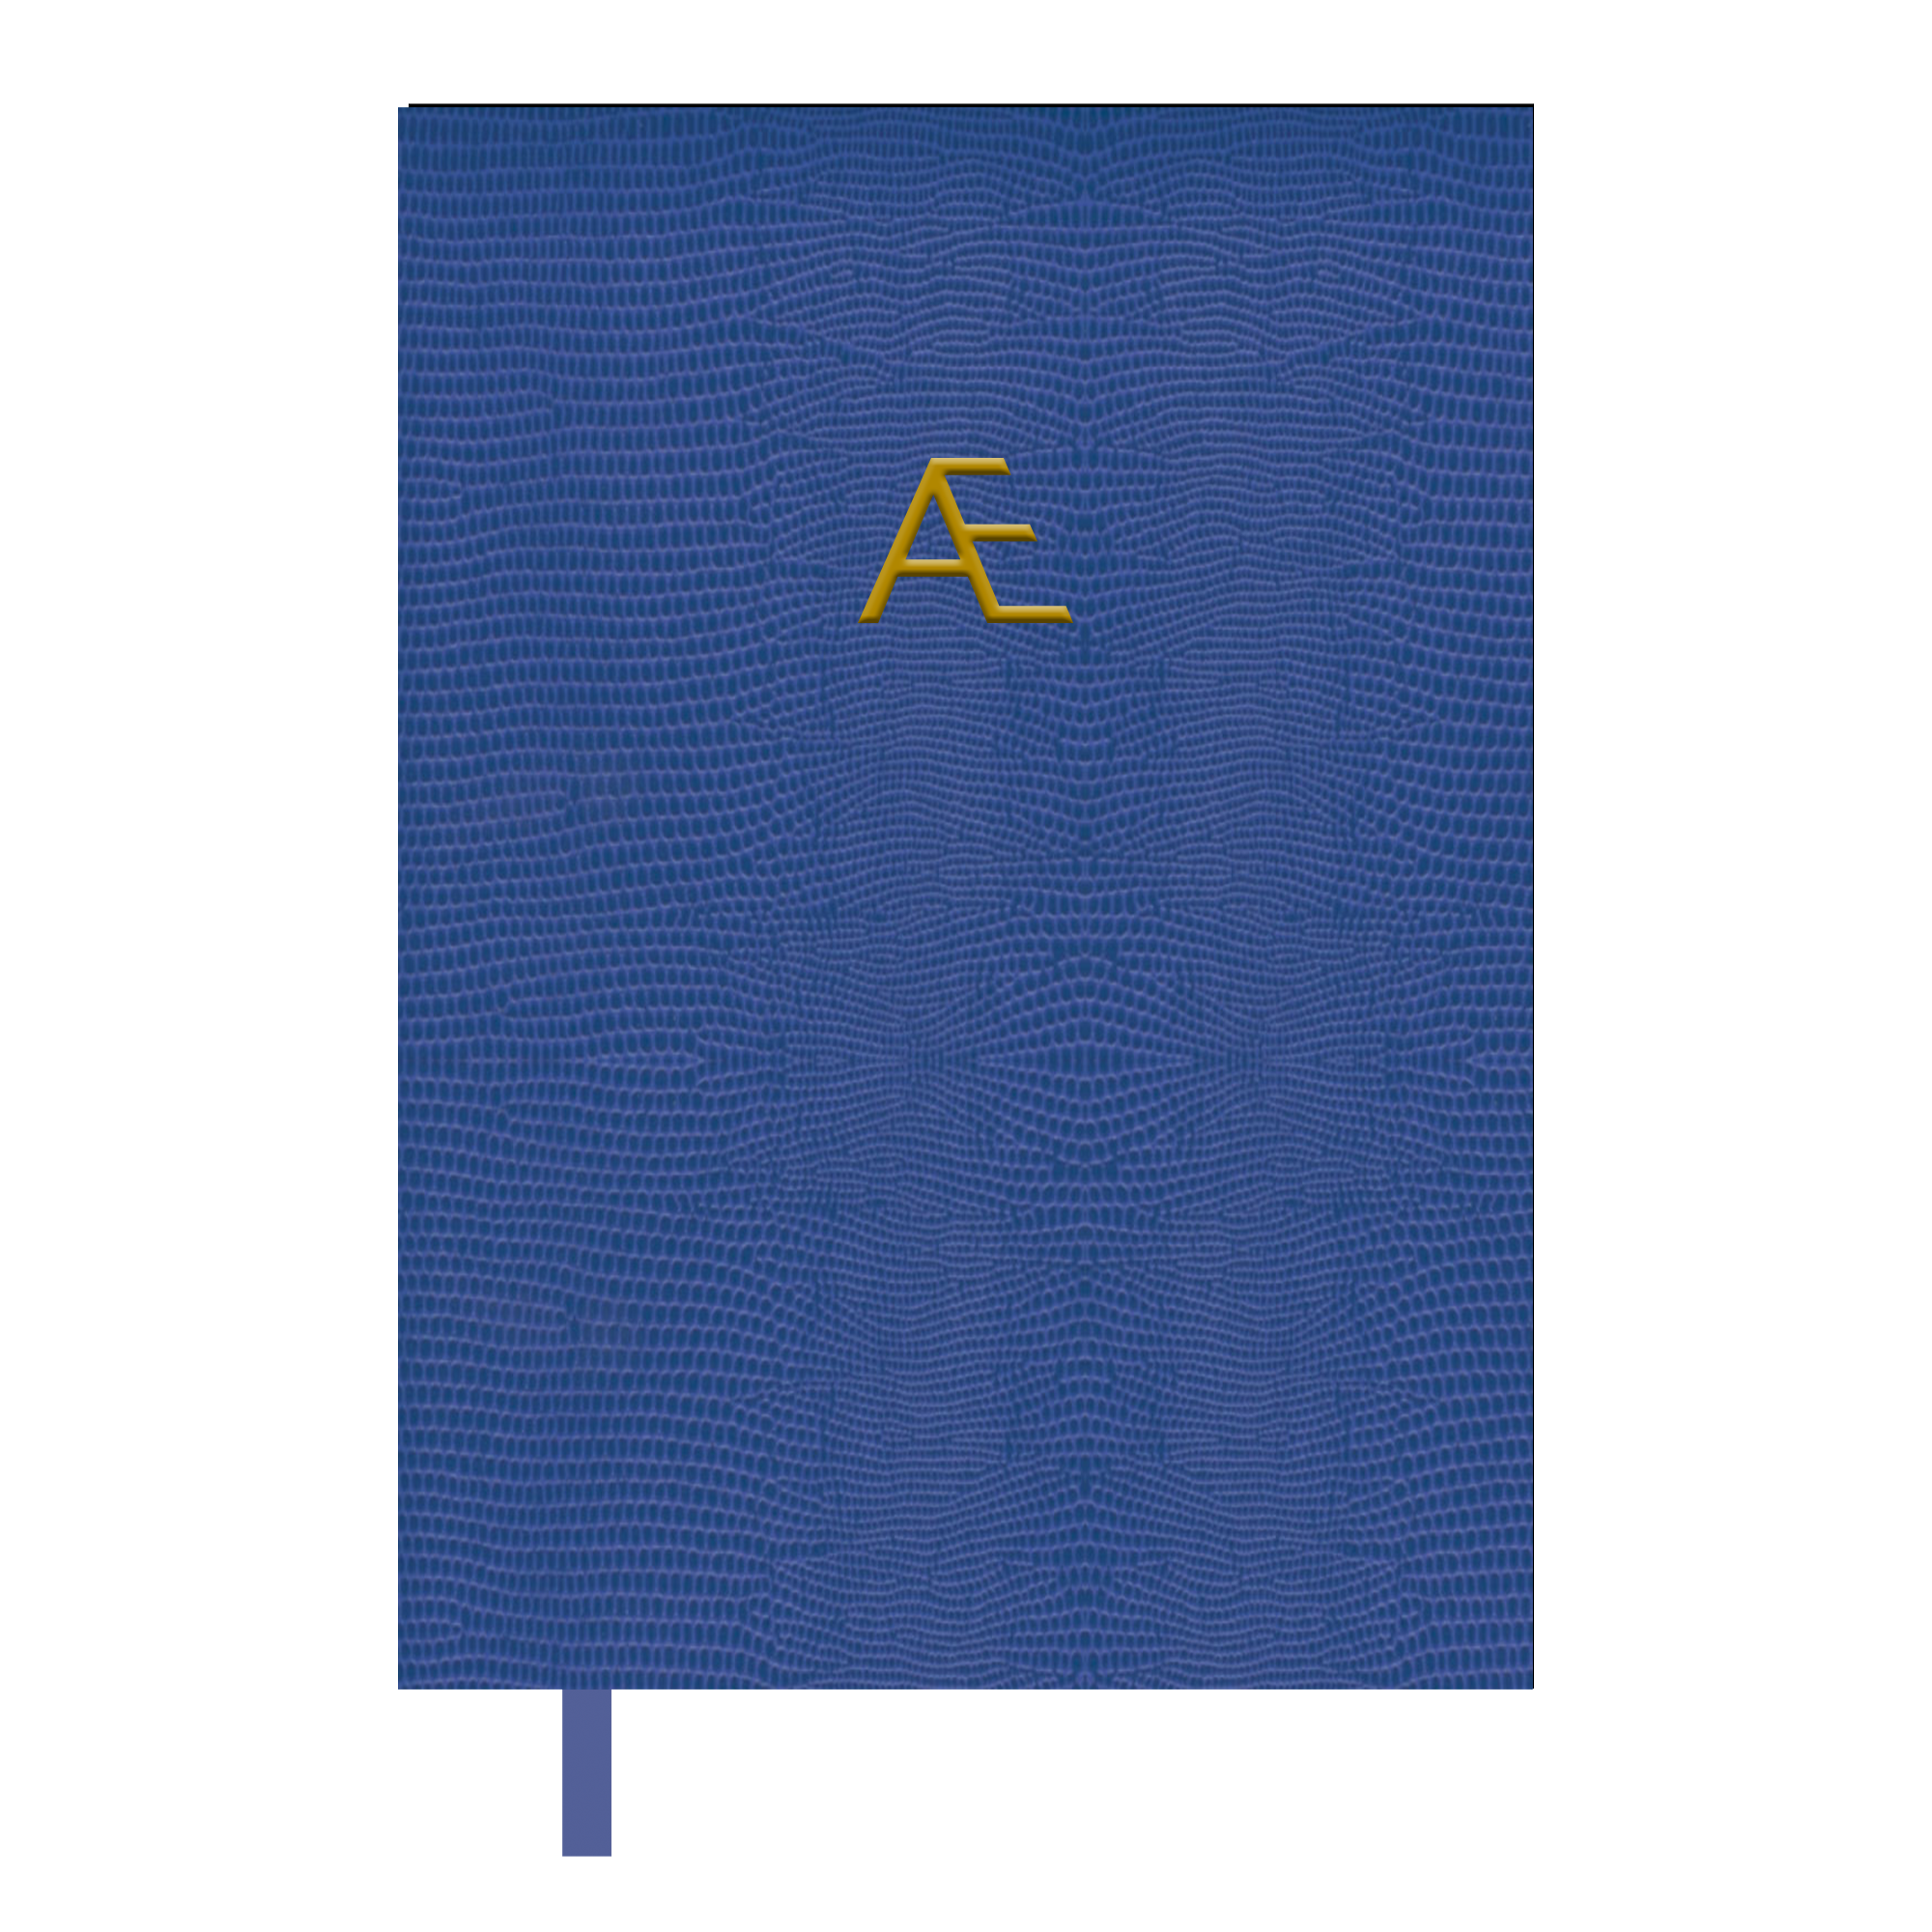 George Michael Blue Notebook